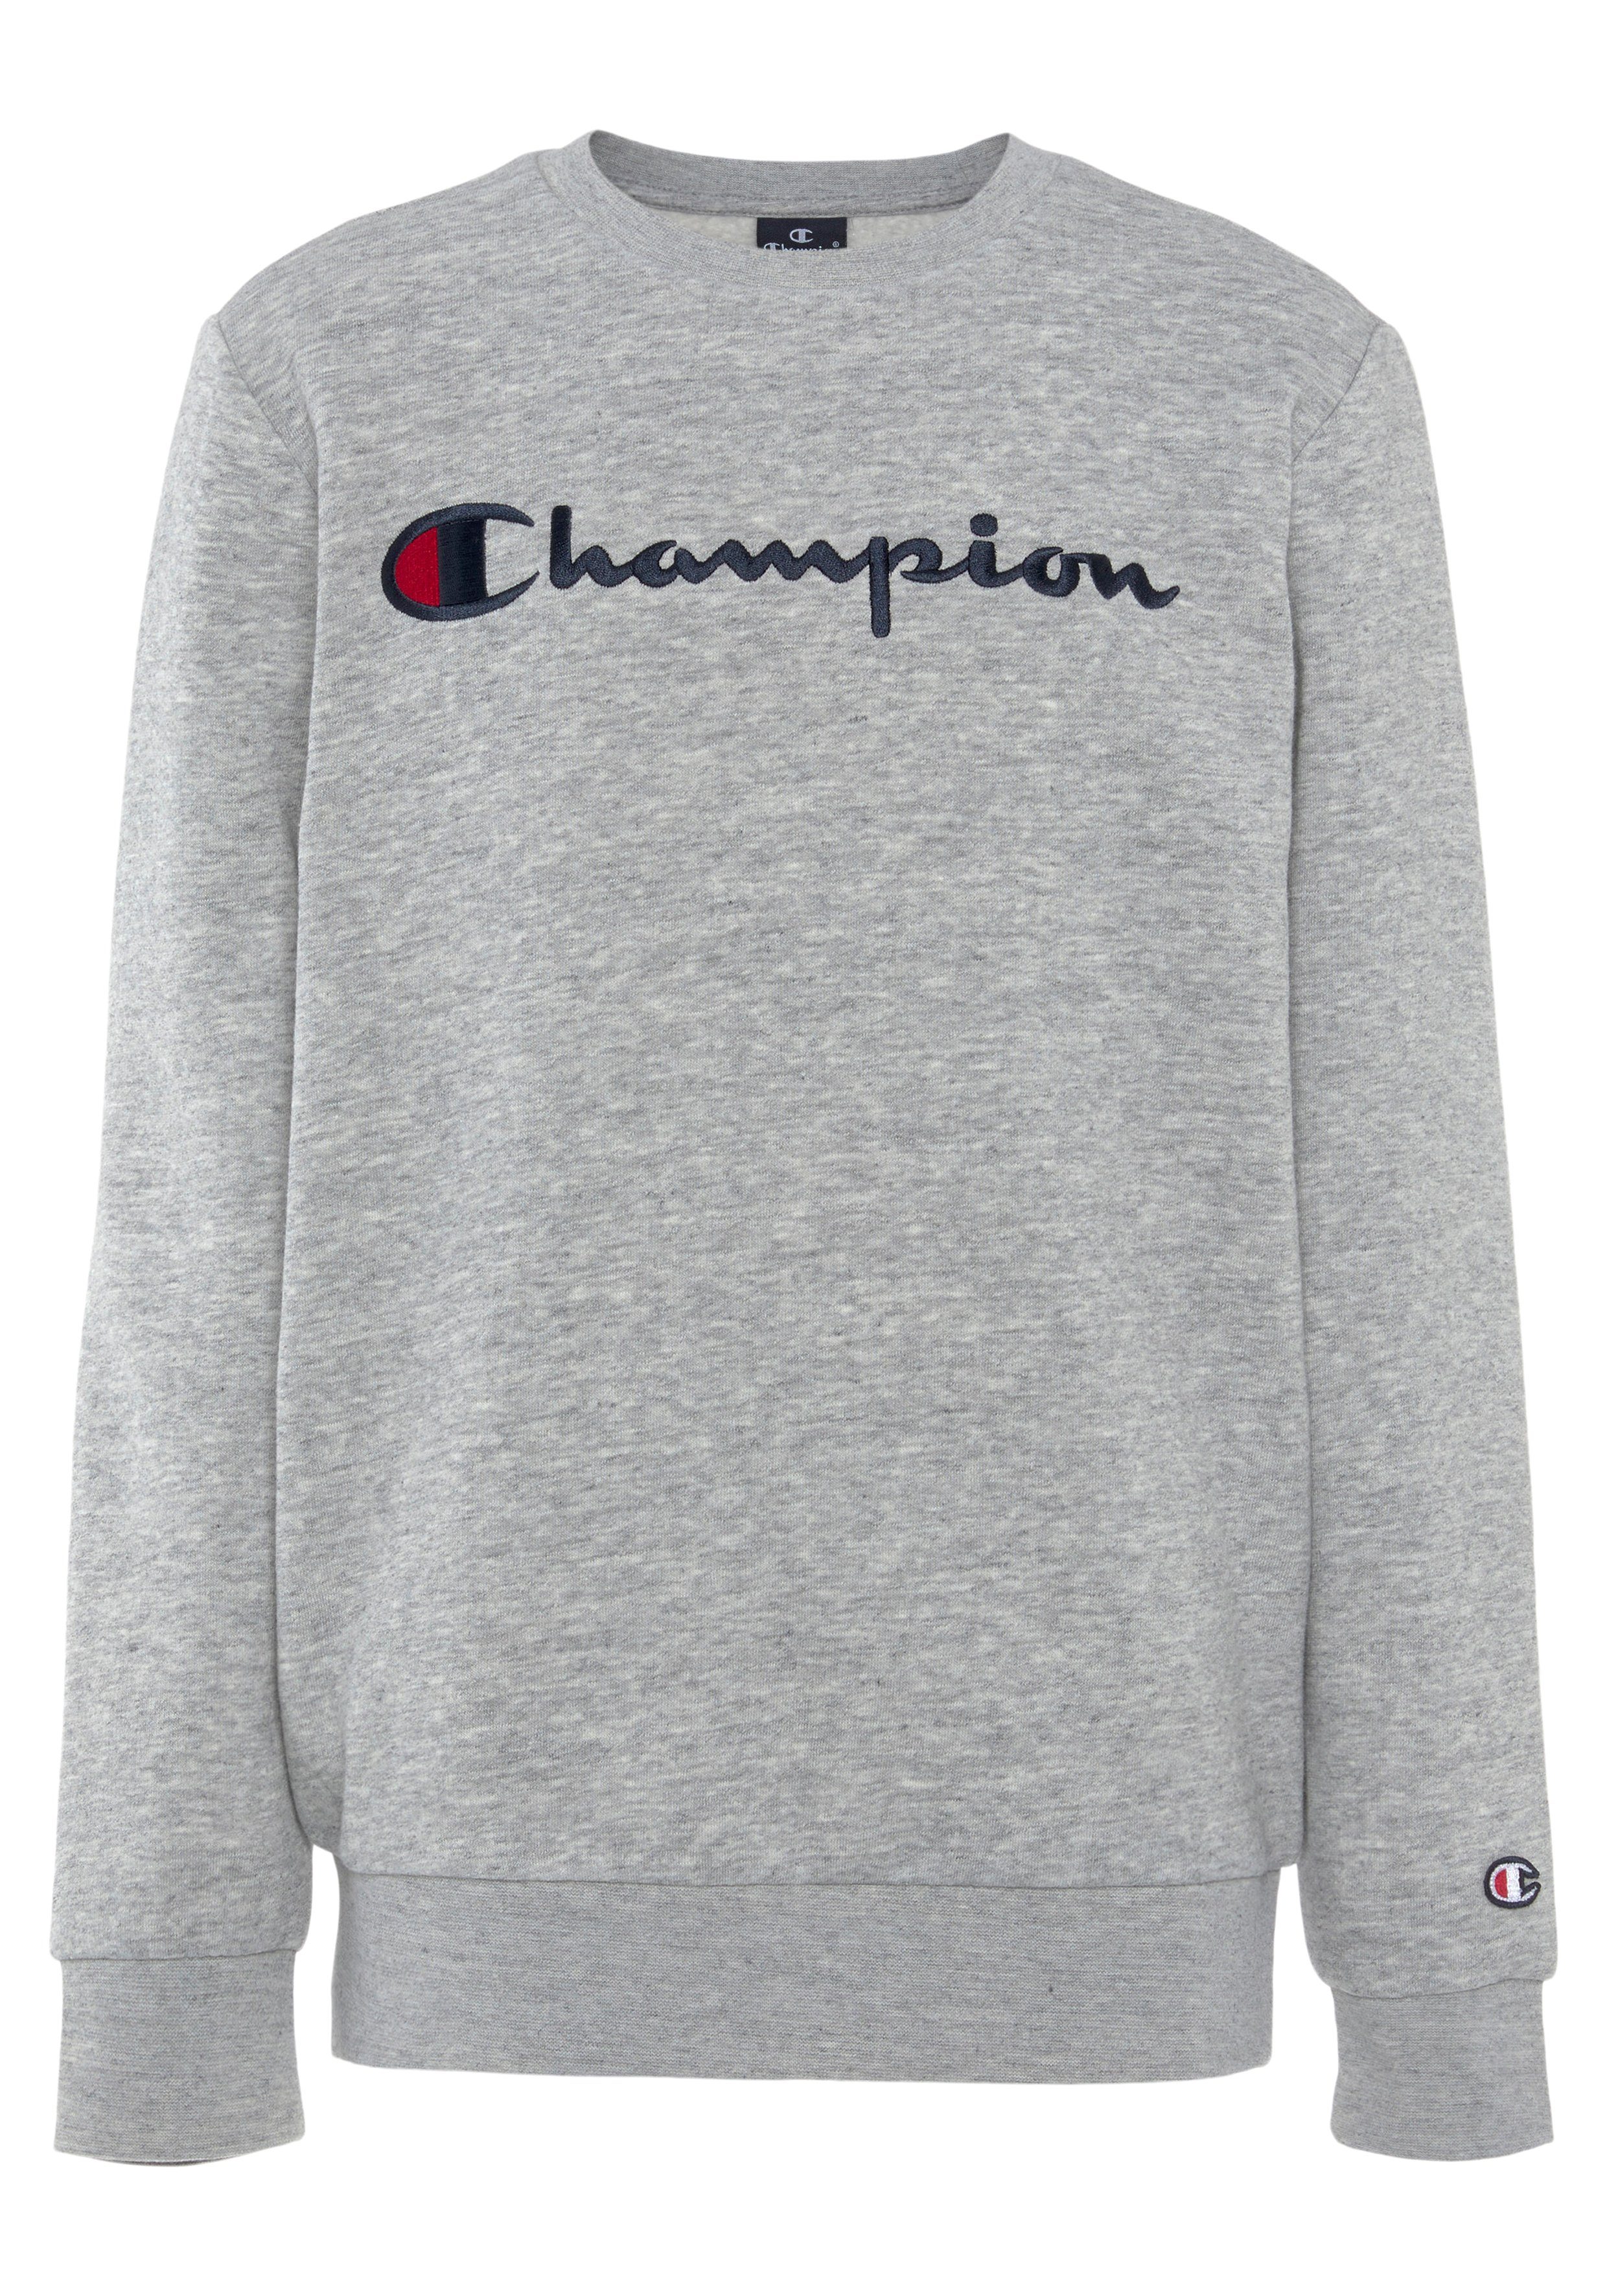 hellgrau Classic large Crewneck Logo mel Sweatshirt Champion - Kinder Sweatshirt für